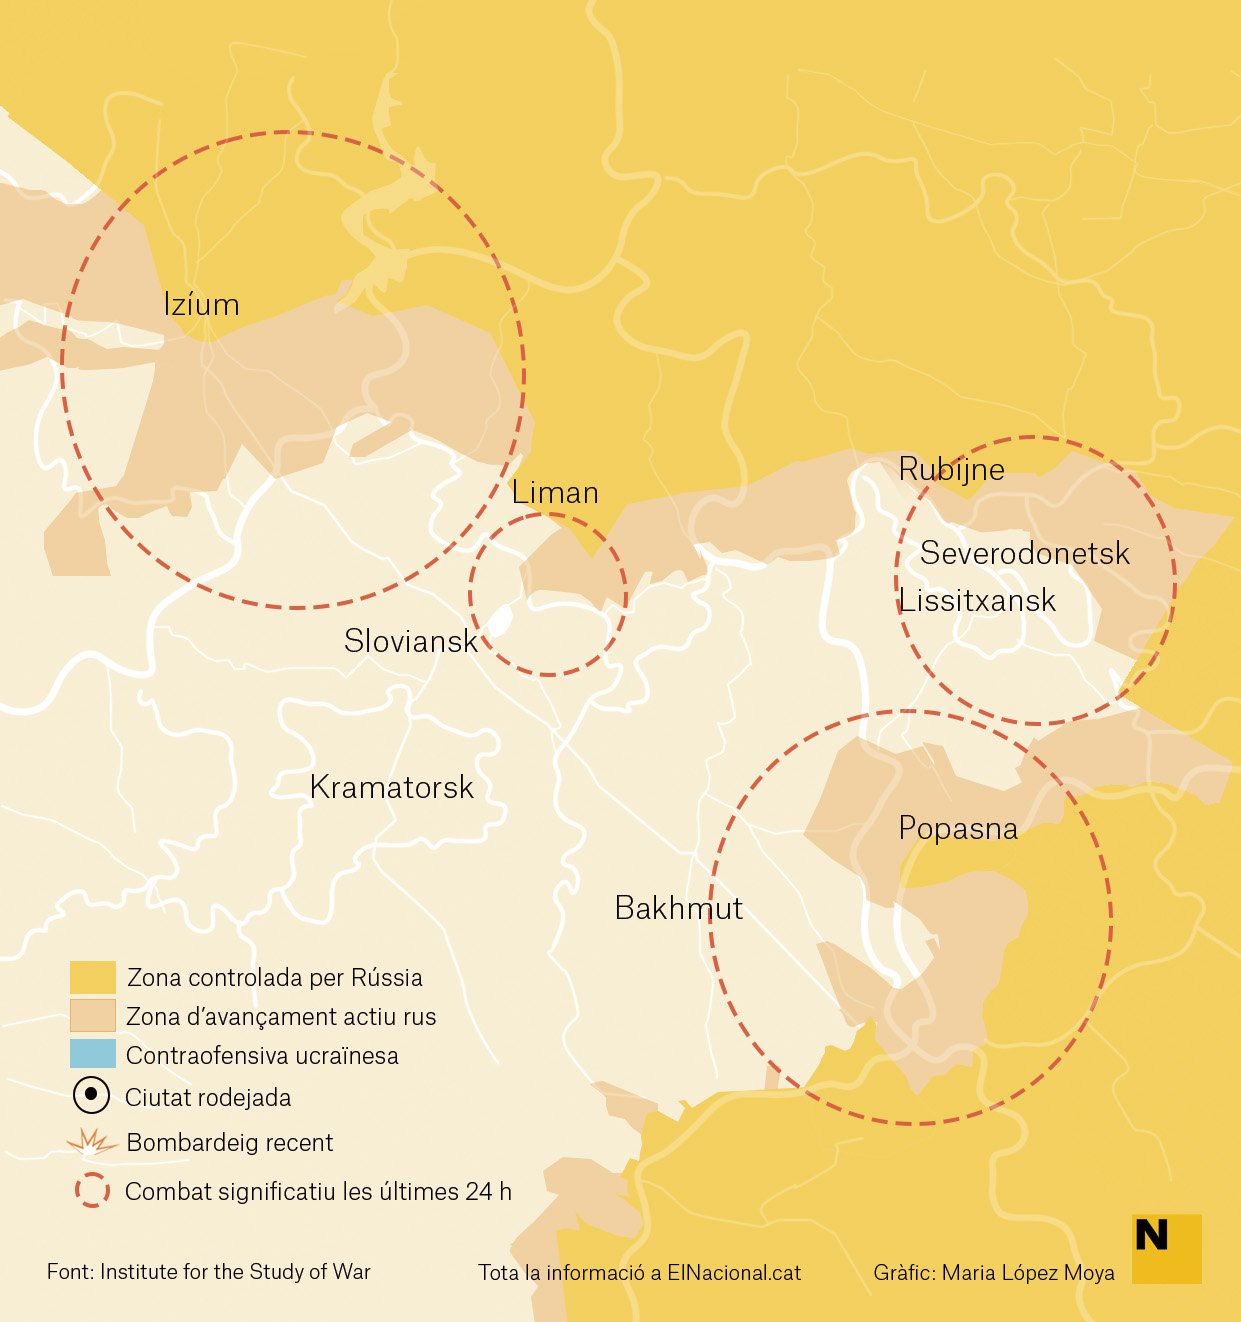 Mapa Ucraïna Donbas 6 juny cat   Maria López Moya 